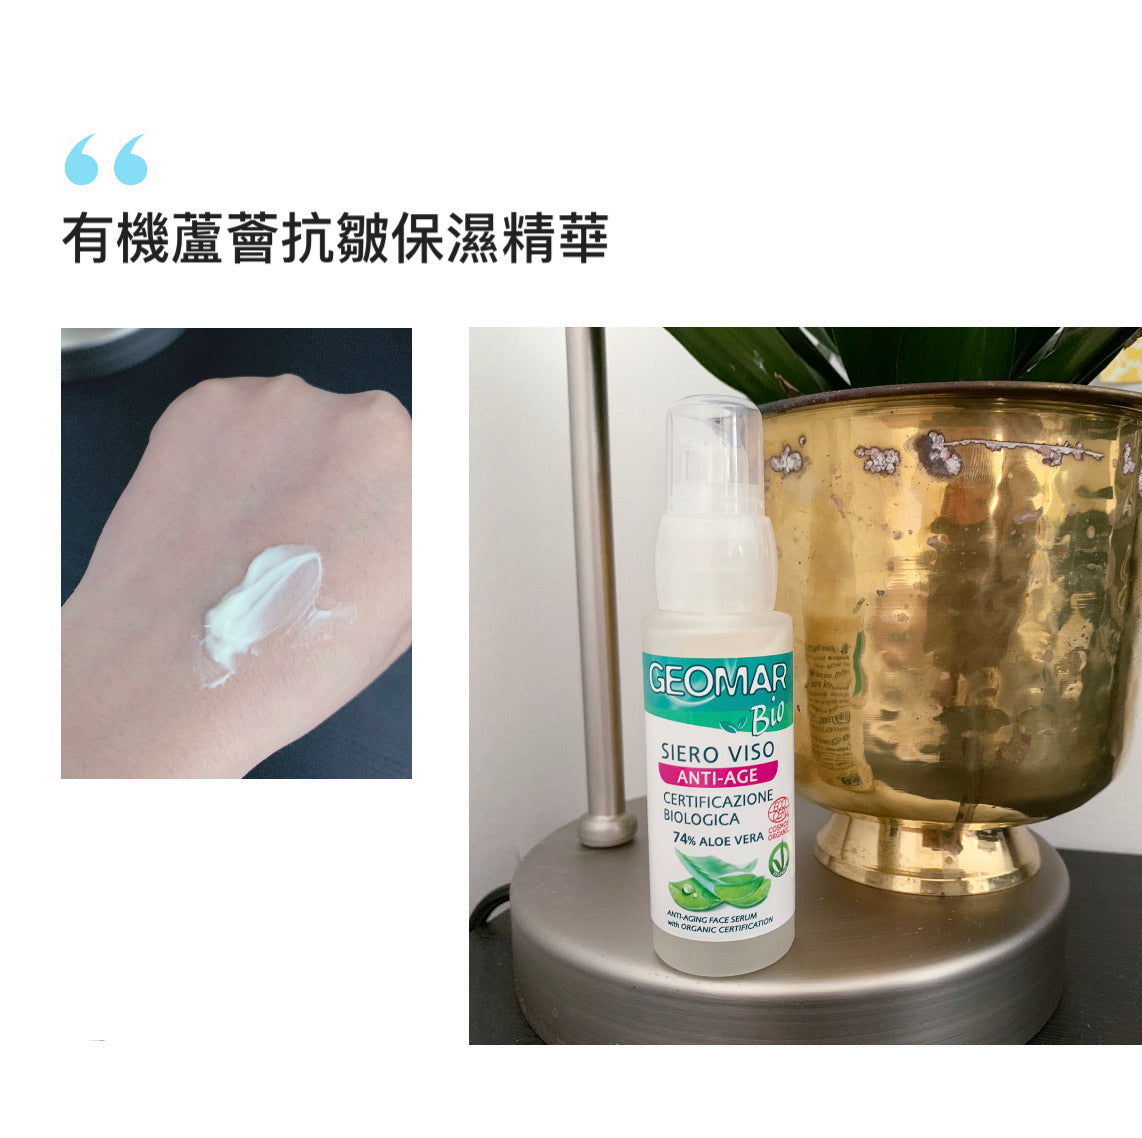 意大利GEOMAR 有機蘆薈抗皺保濕精華Geomar Anti-Age Organic Face Serum - buy European skincare in Hong Kong - 1click2beauty